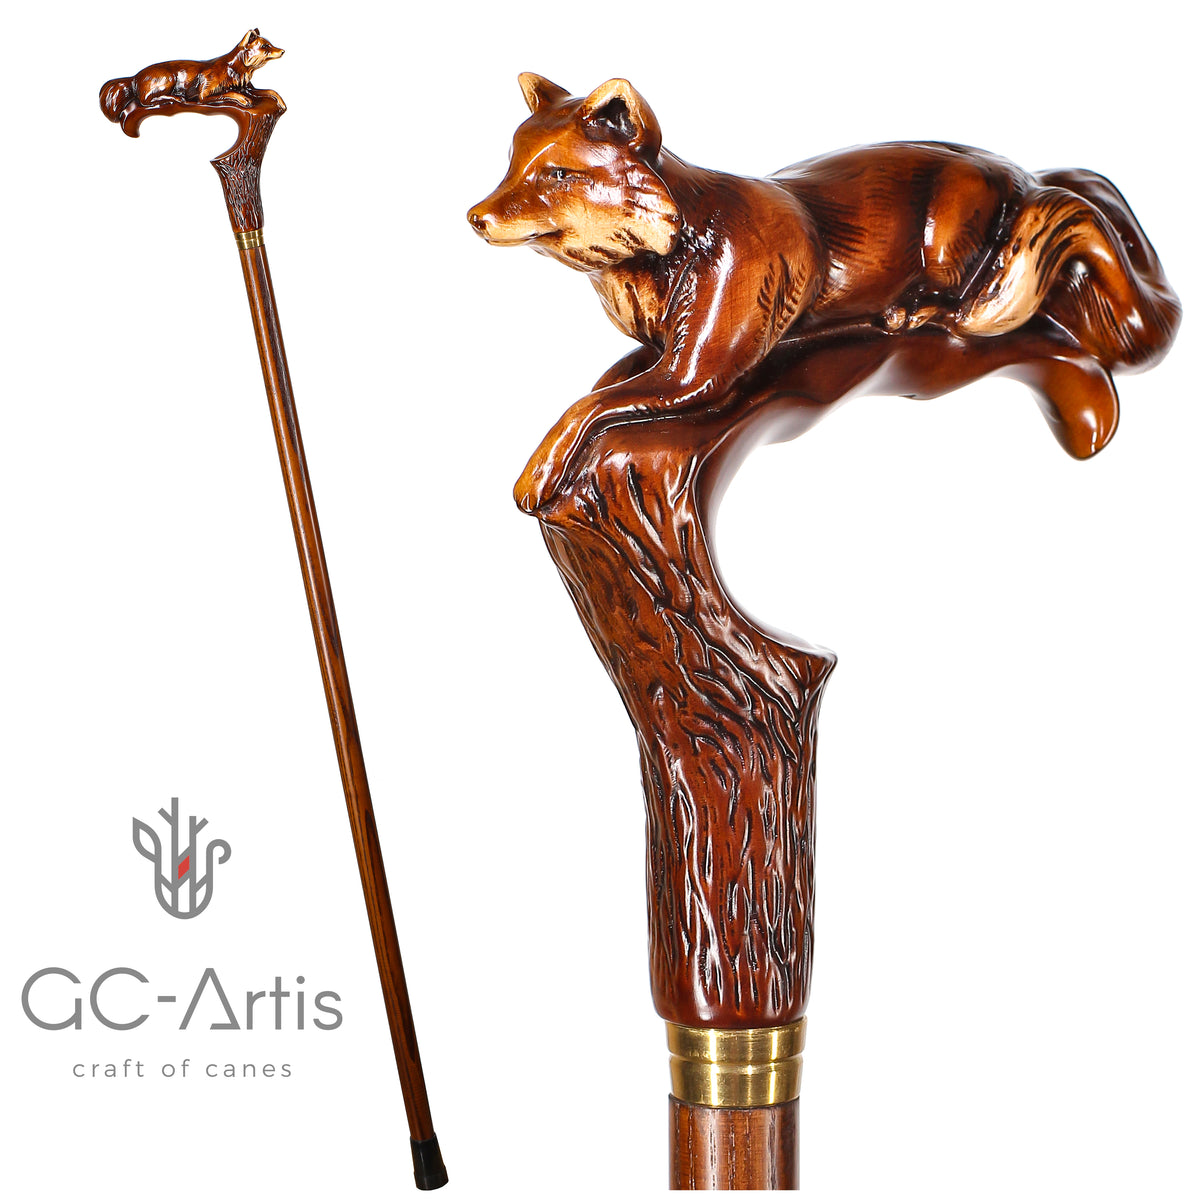 93cm WOODEN WALKING STICK Wood Cane Pole Carved Varnished Deluxe